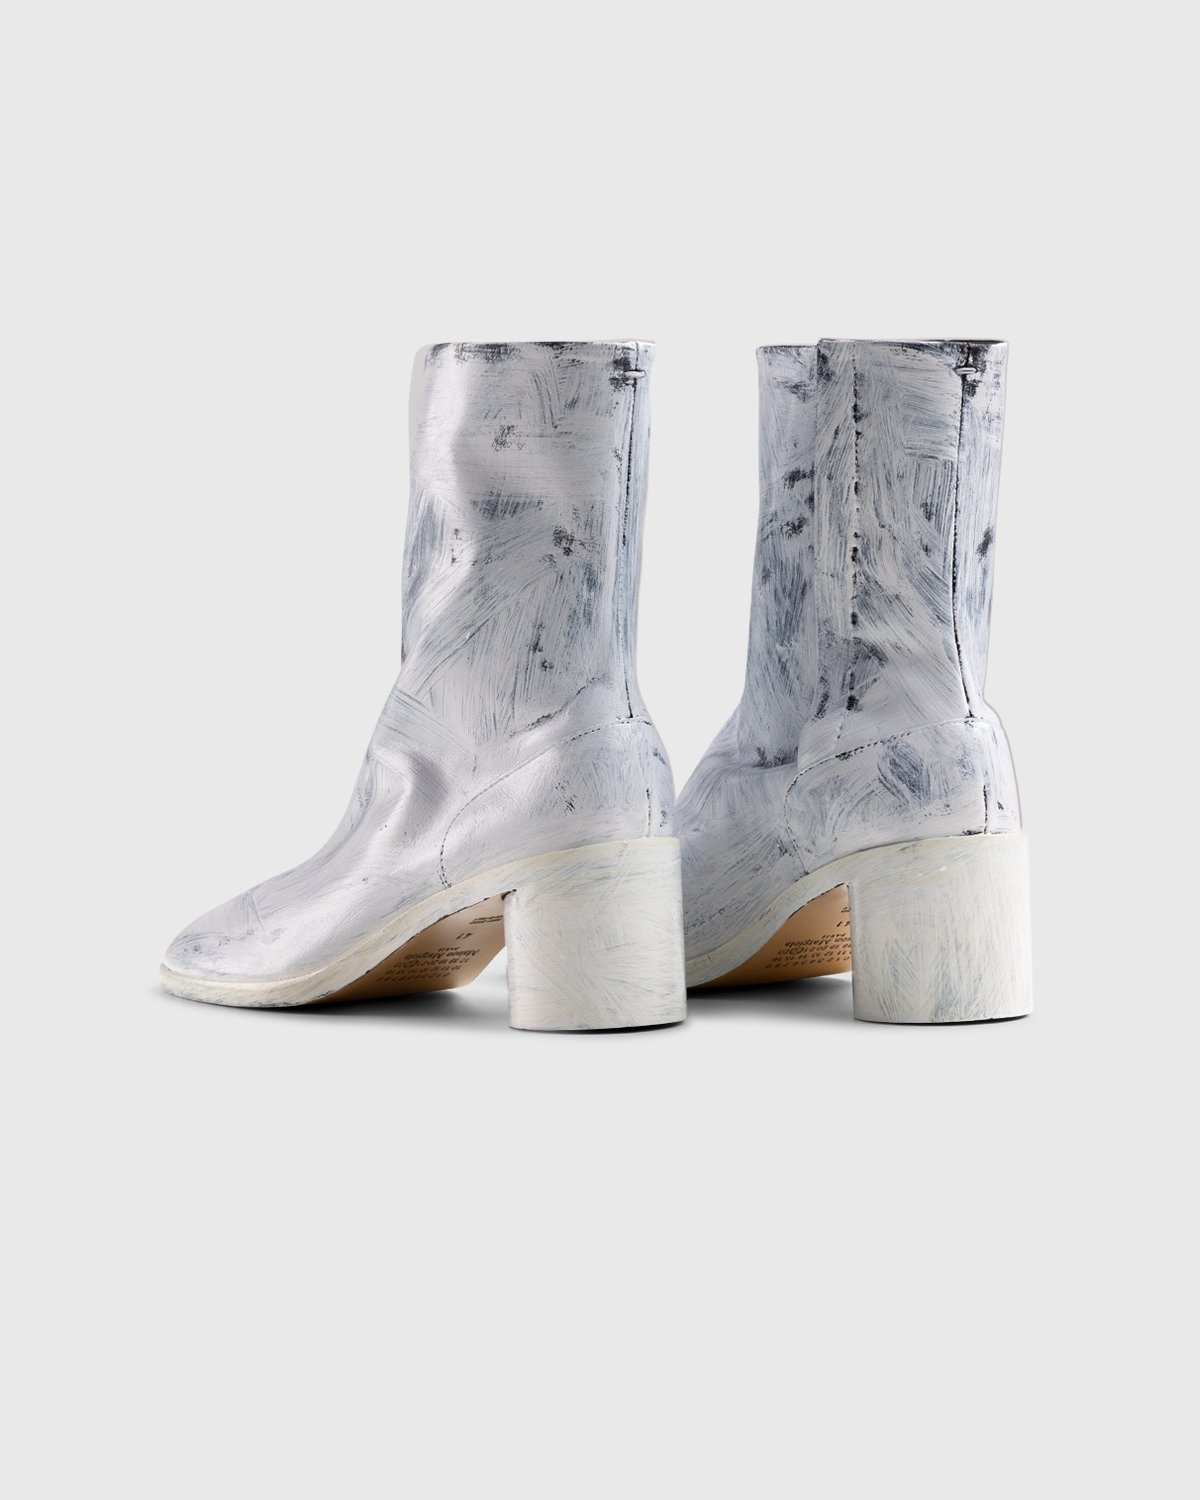 Maison Margiela - Tabi Bianchetto Chelsea Boots White - Footwear - White - Image 3